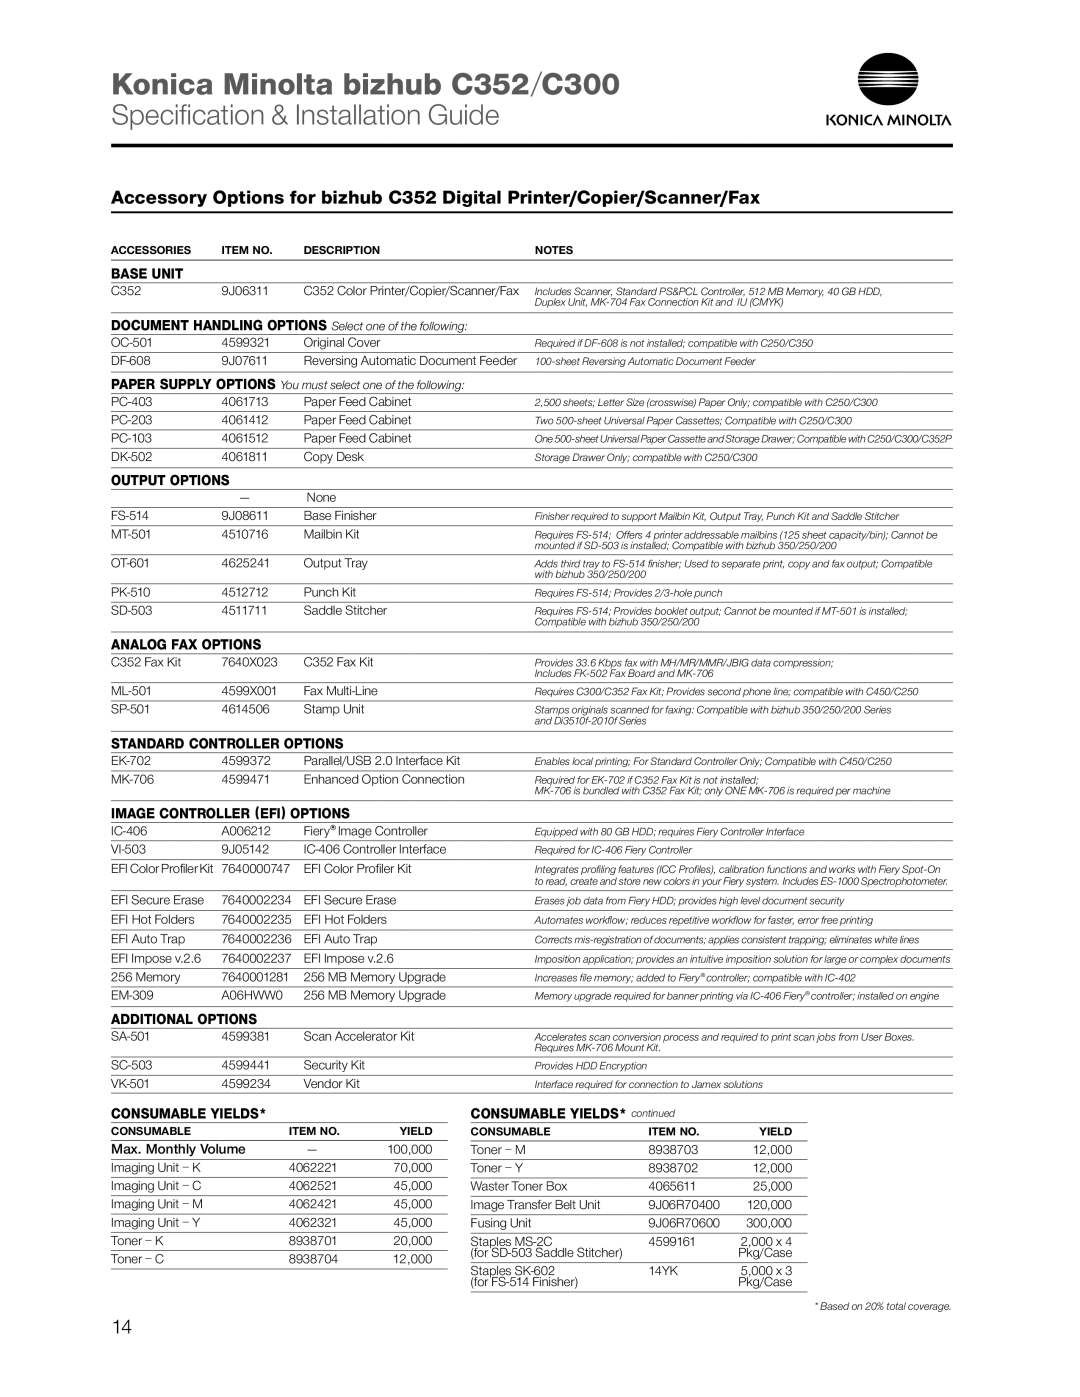 Konica Minolta dimensions Konica Minolta bizhub C352/C300, Specification & Installation Guide, Base Unit, Output Options 